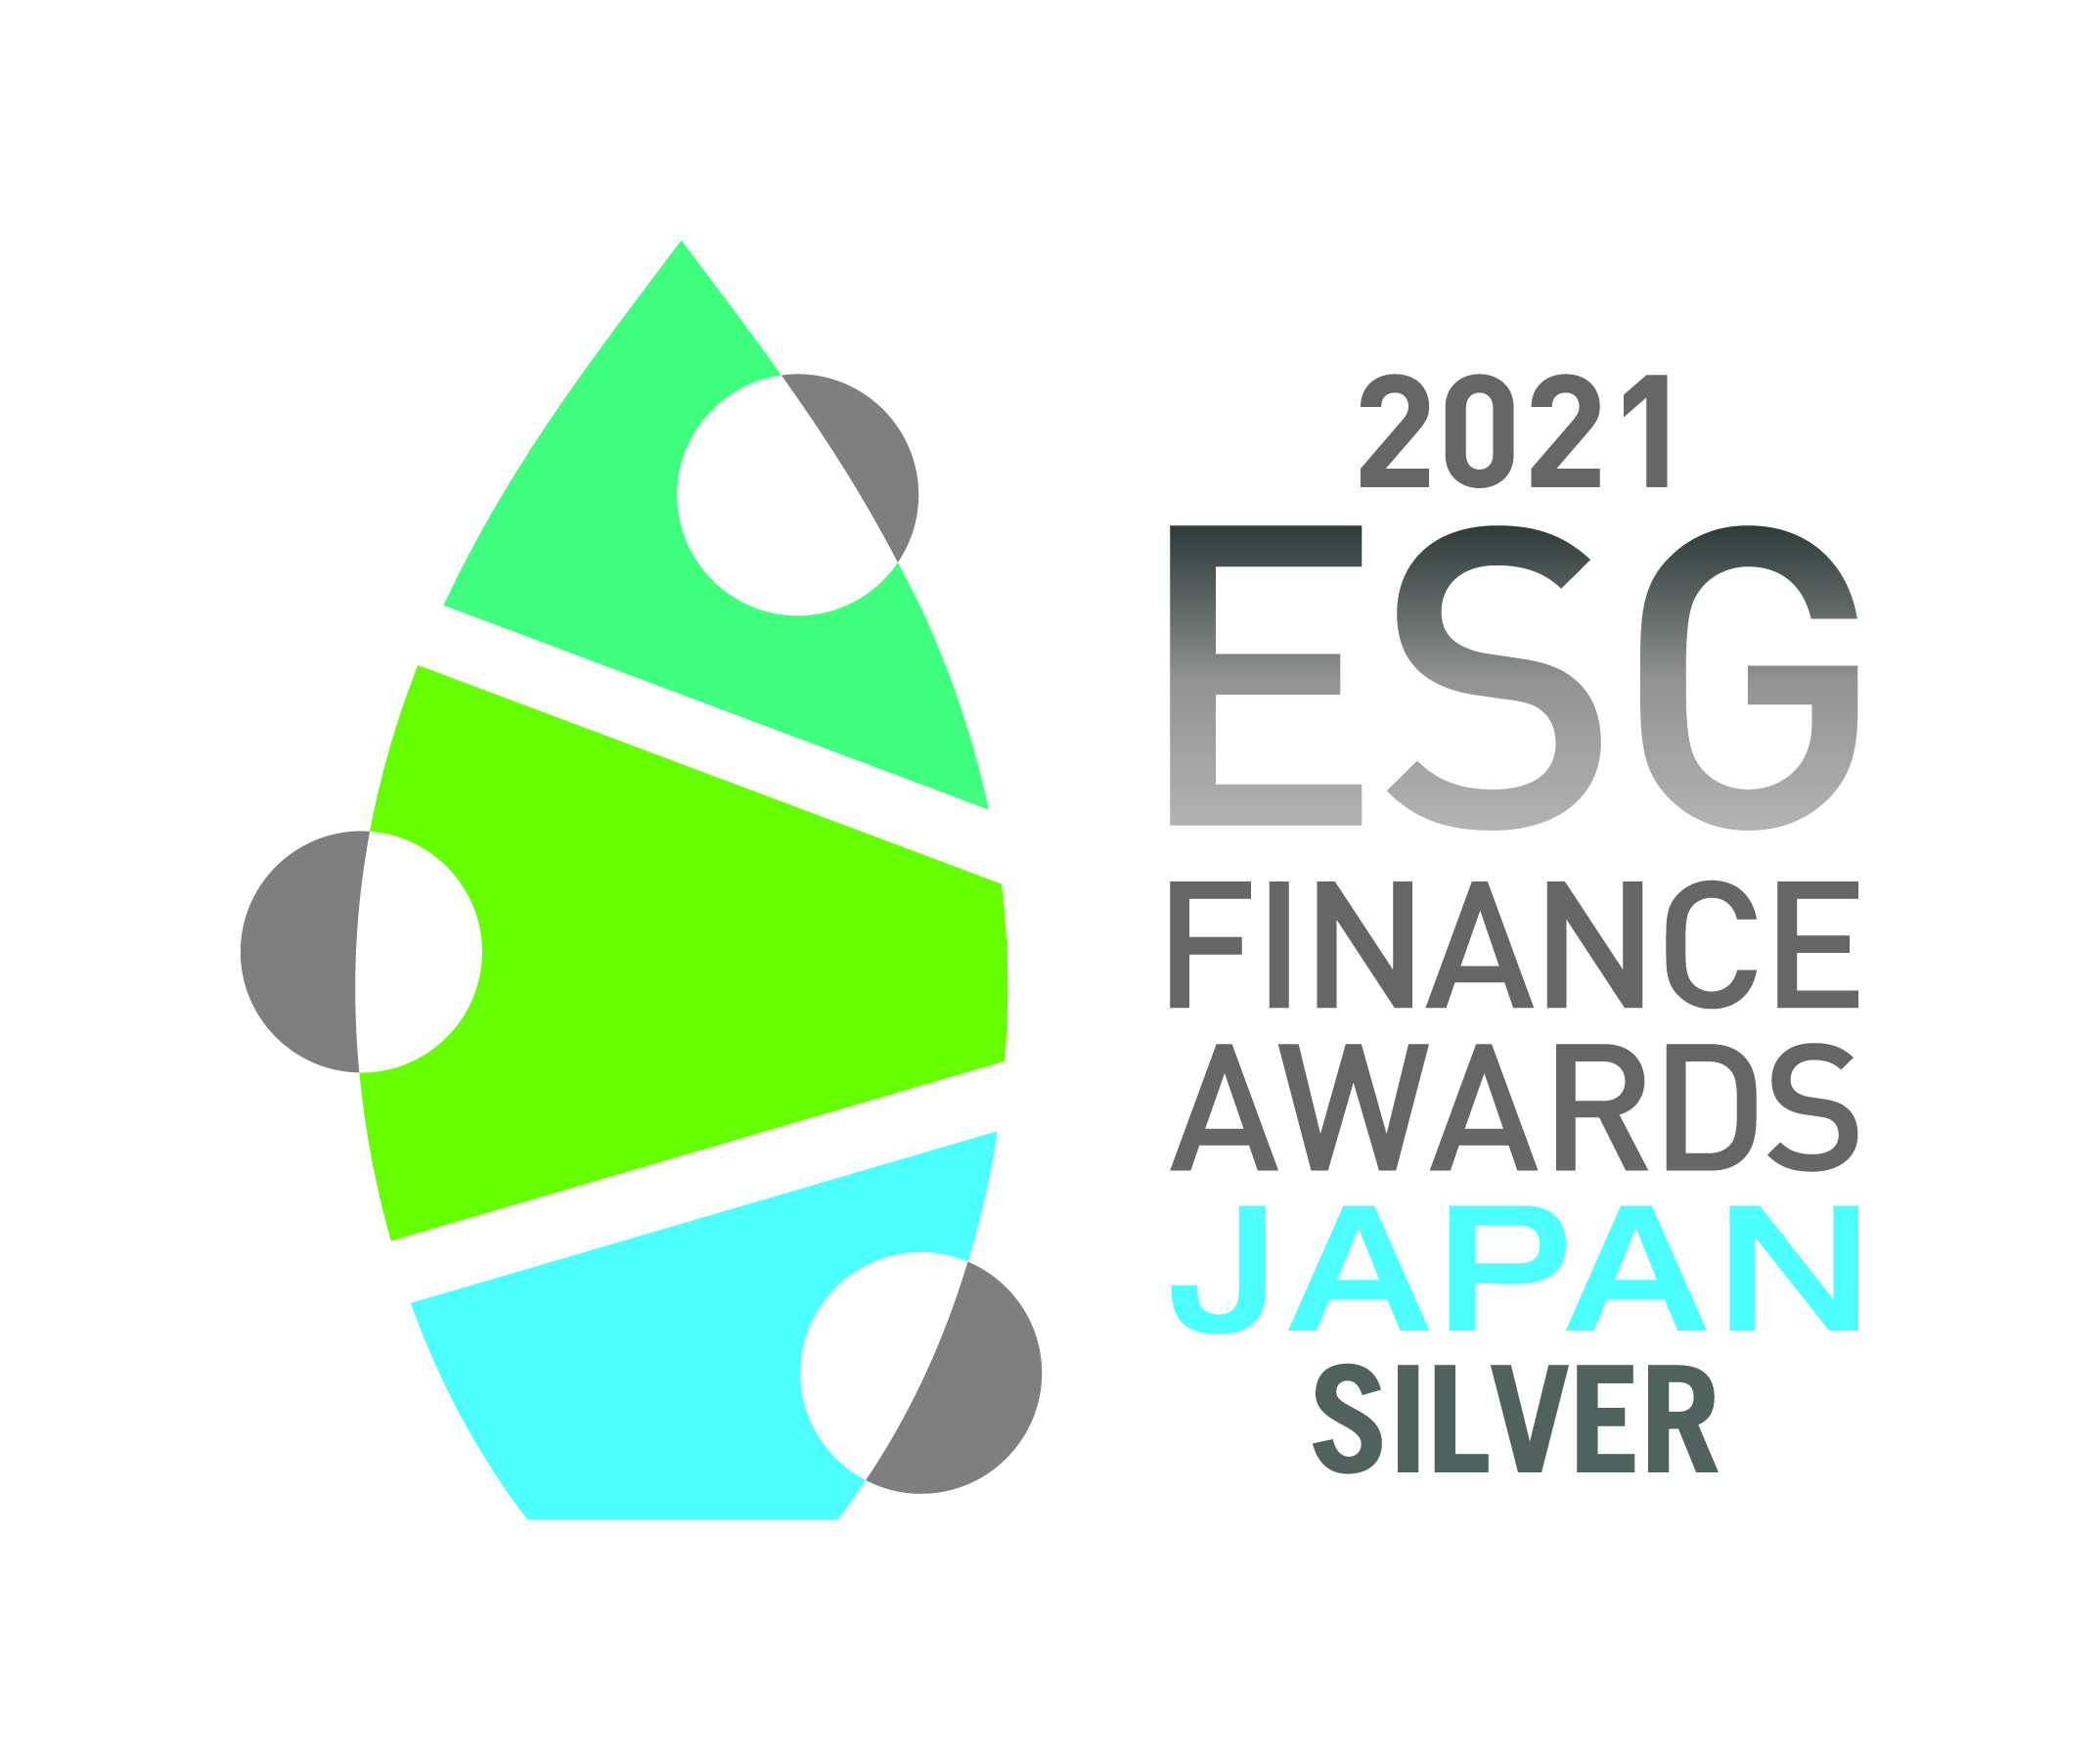 Konica Minolta Wins the Second ESG Finance Awards Japan: Minister of the Environment Award